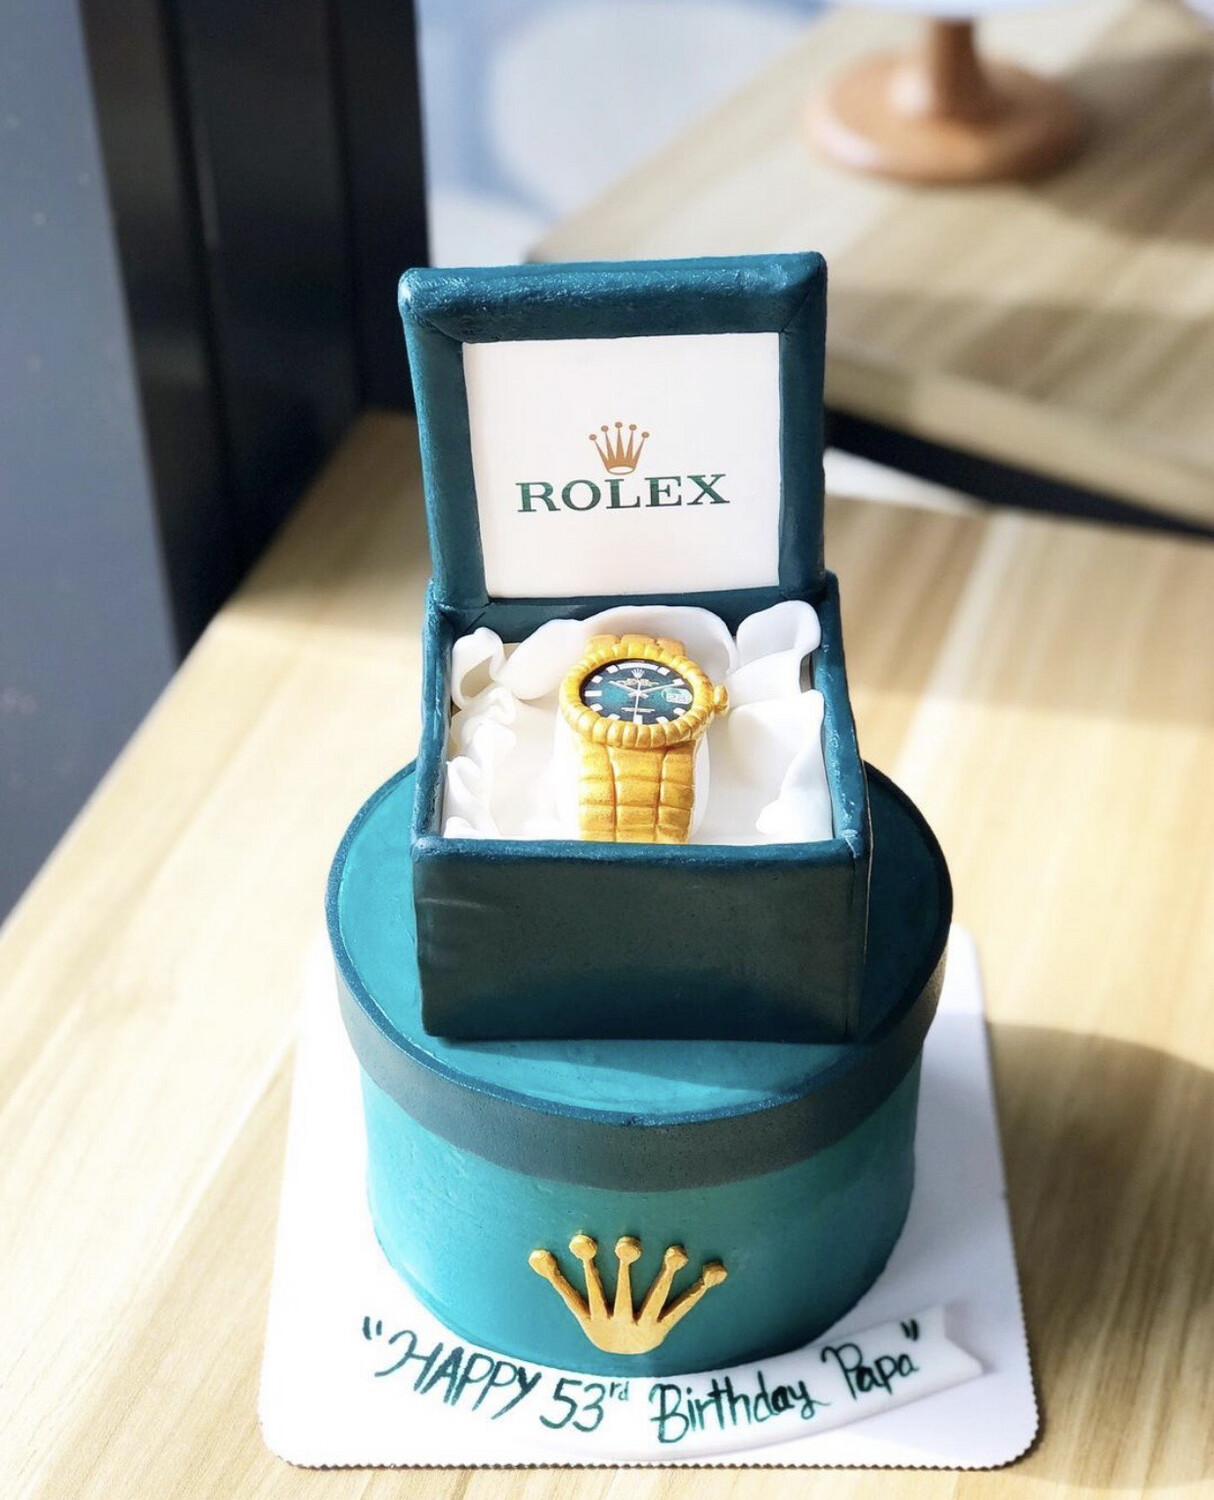 Rolex Watch Box Cake 2